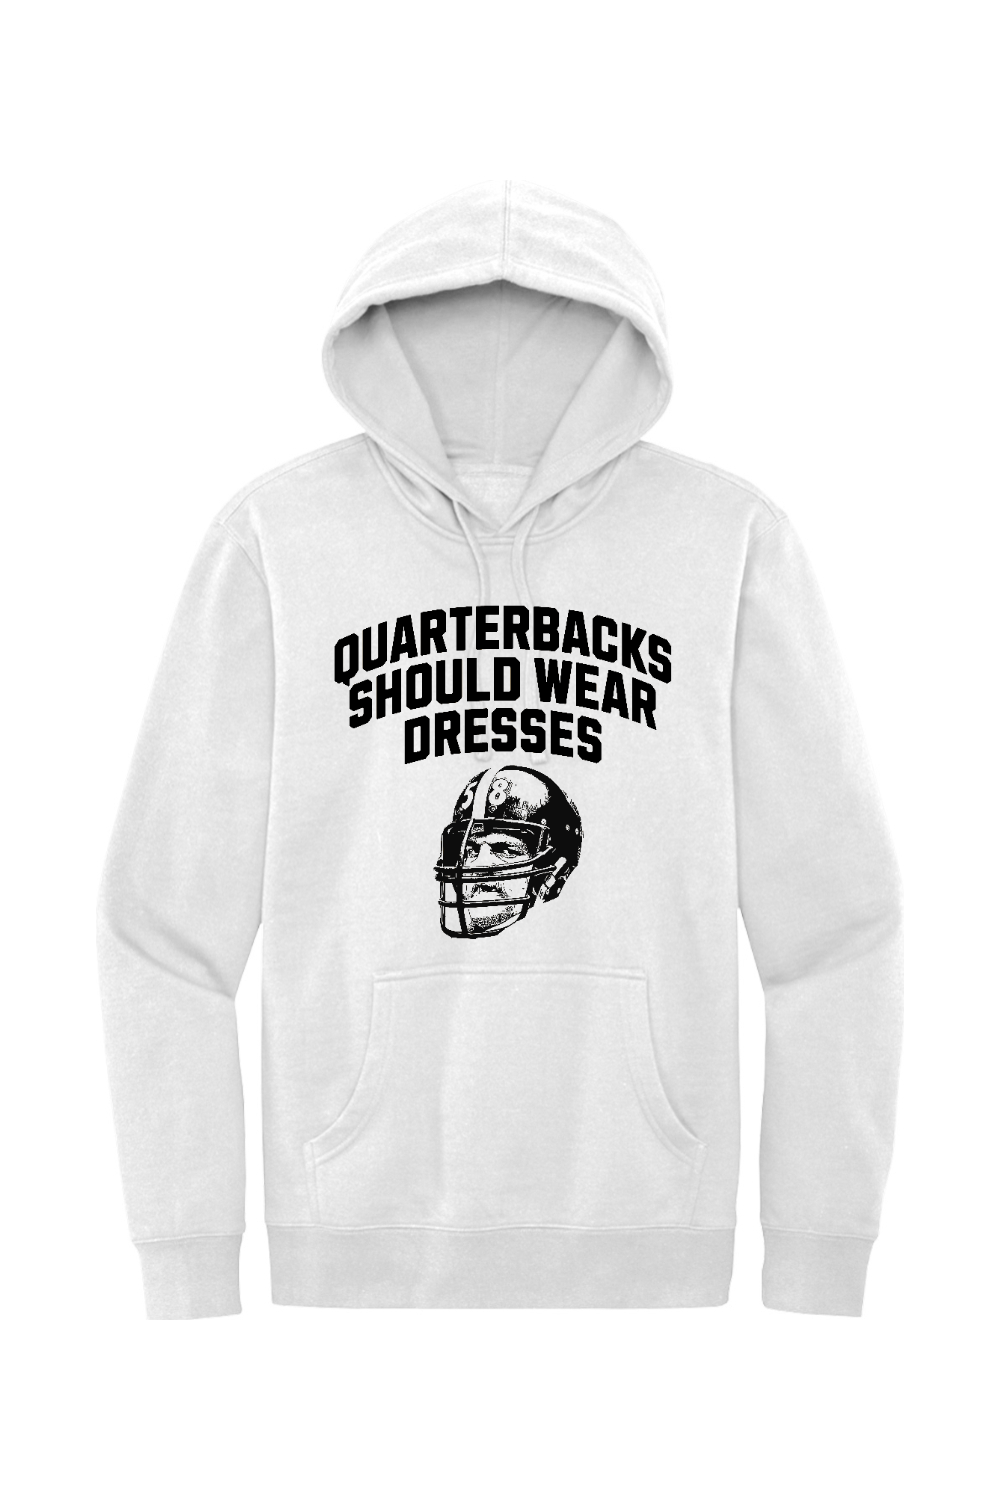 Quarterbacks Should Wear Dresses - Fleece Hoodie - Yinzylvania